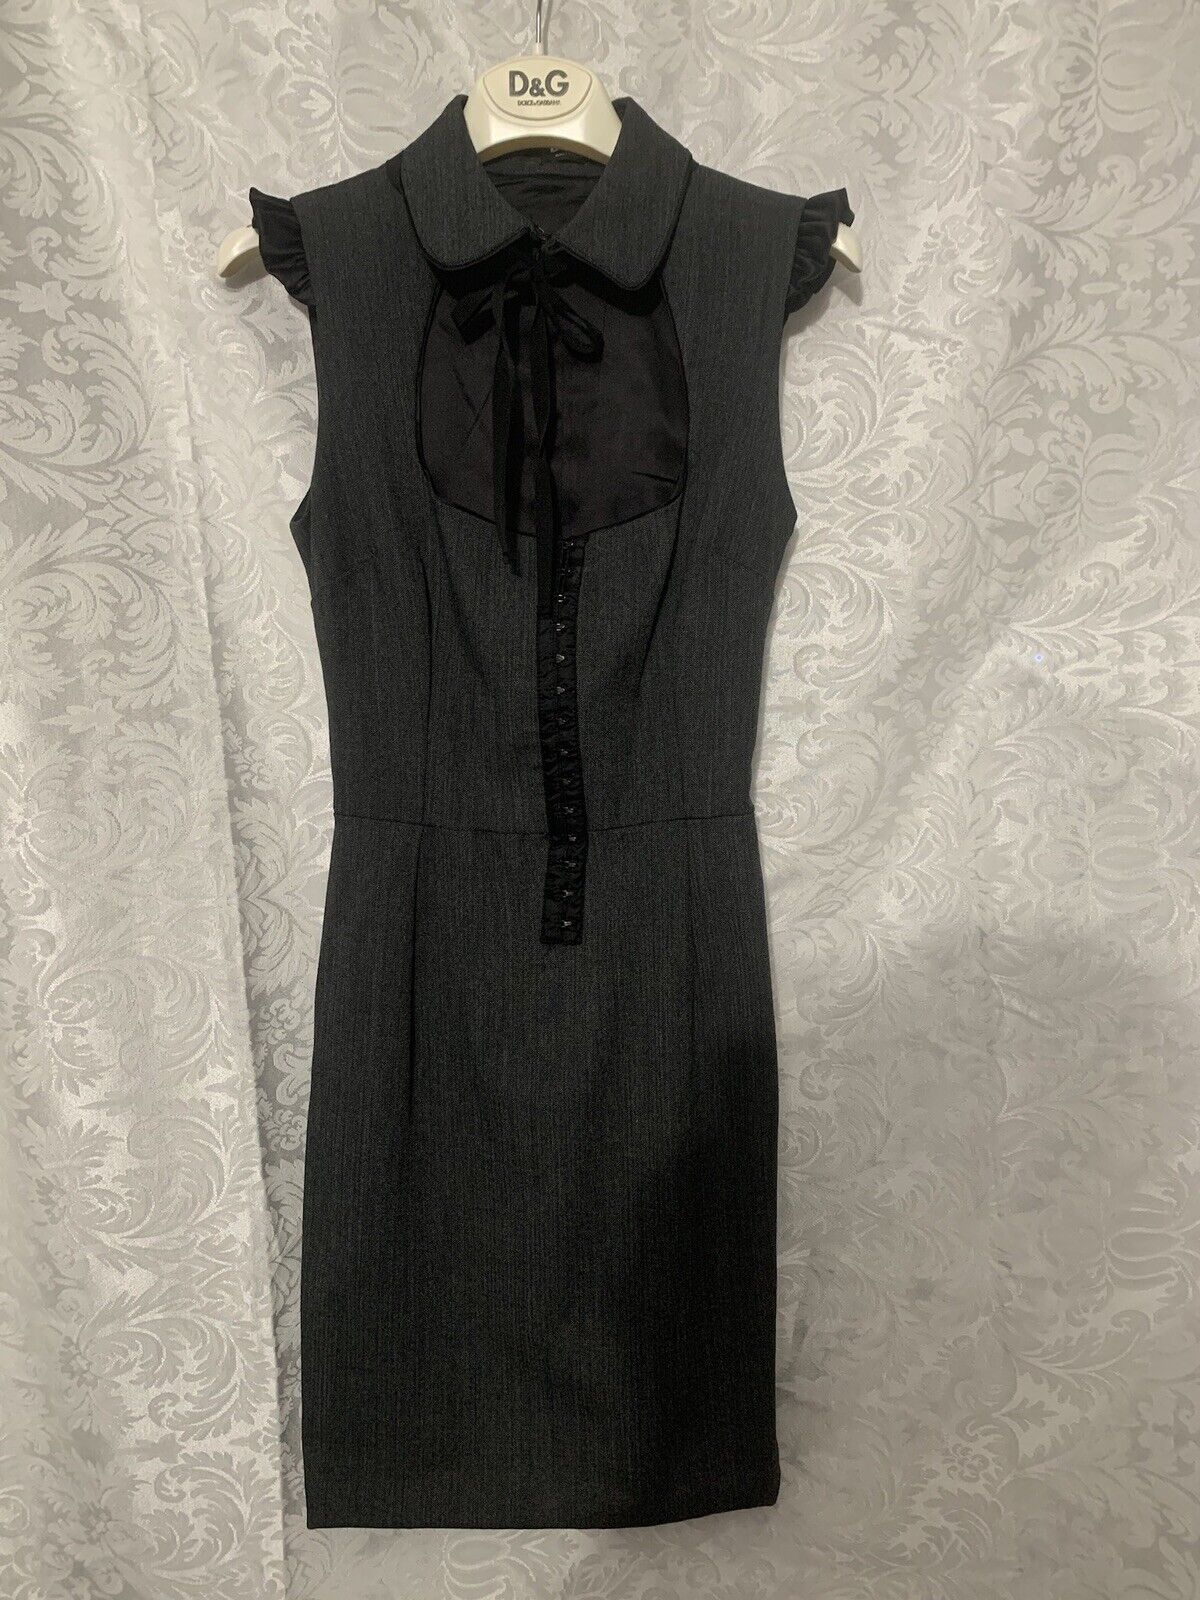 Rare Vtg Dolce & Gabbana D&G Dark Gray Cut Out Corset Dress Size 38 XS